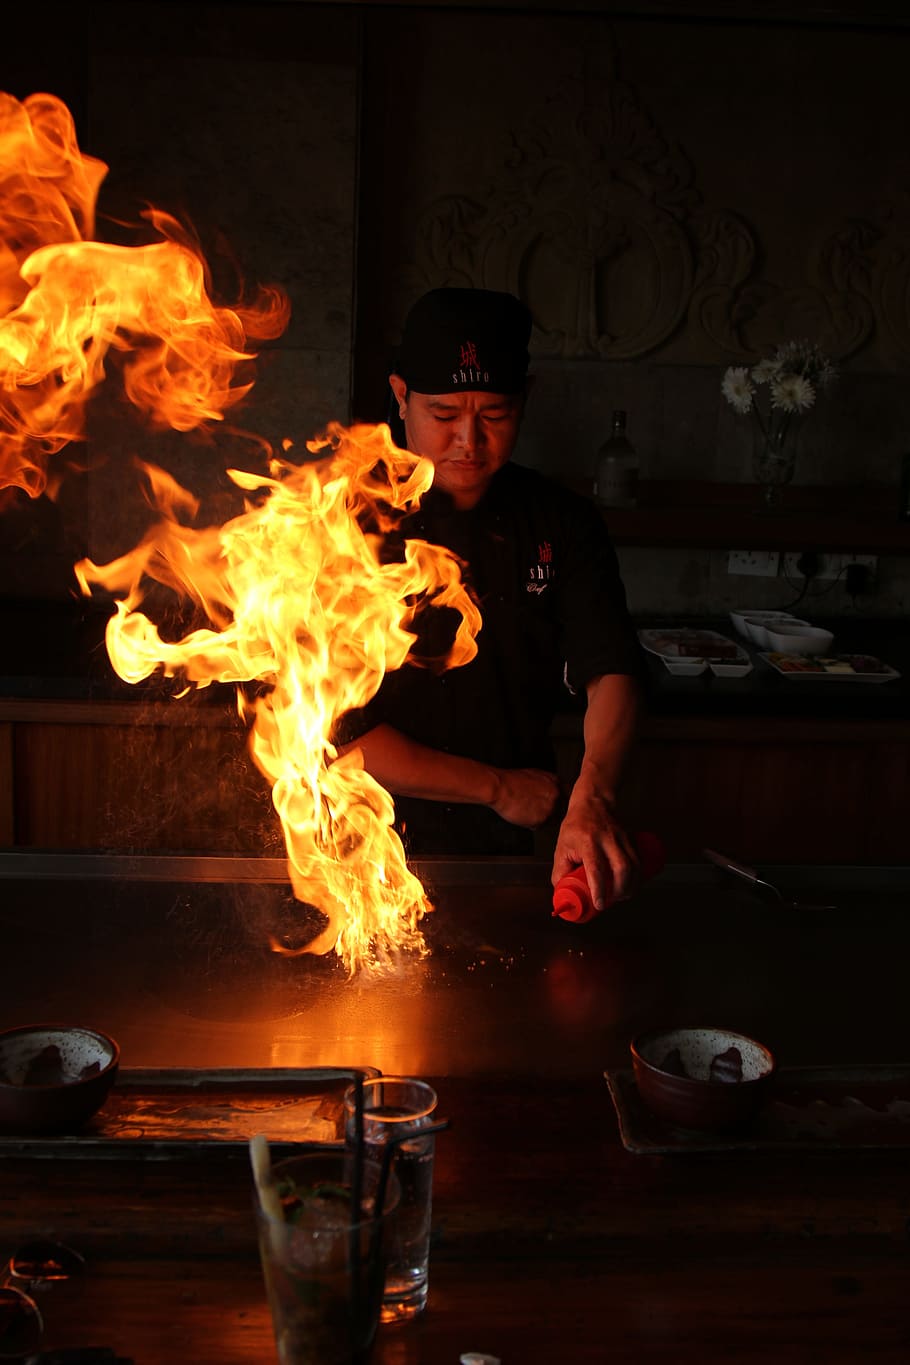 chef putting oil on flaming pan, Teppanyaki, Steak, Fire, Roast